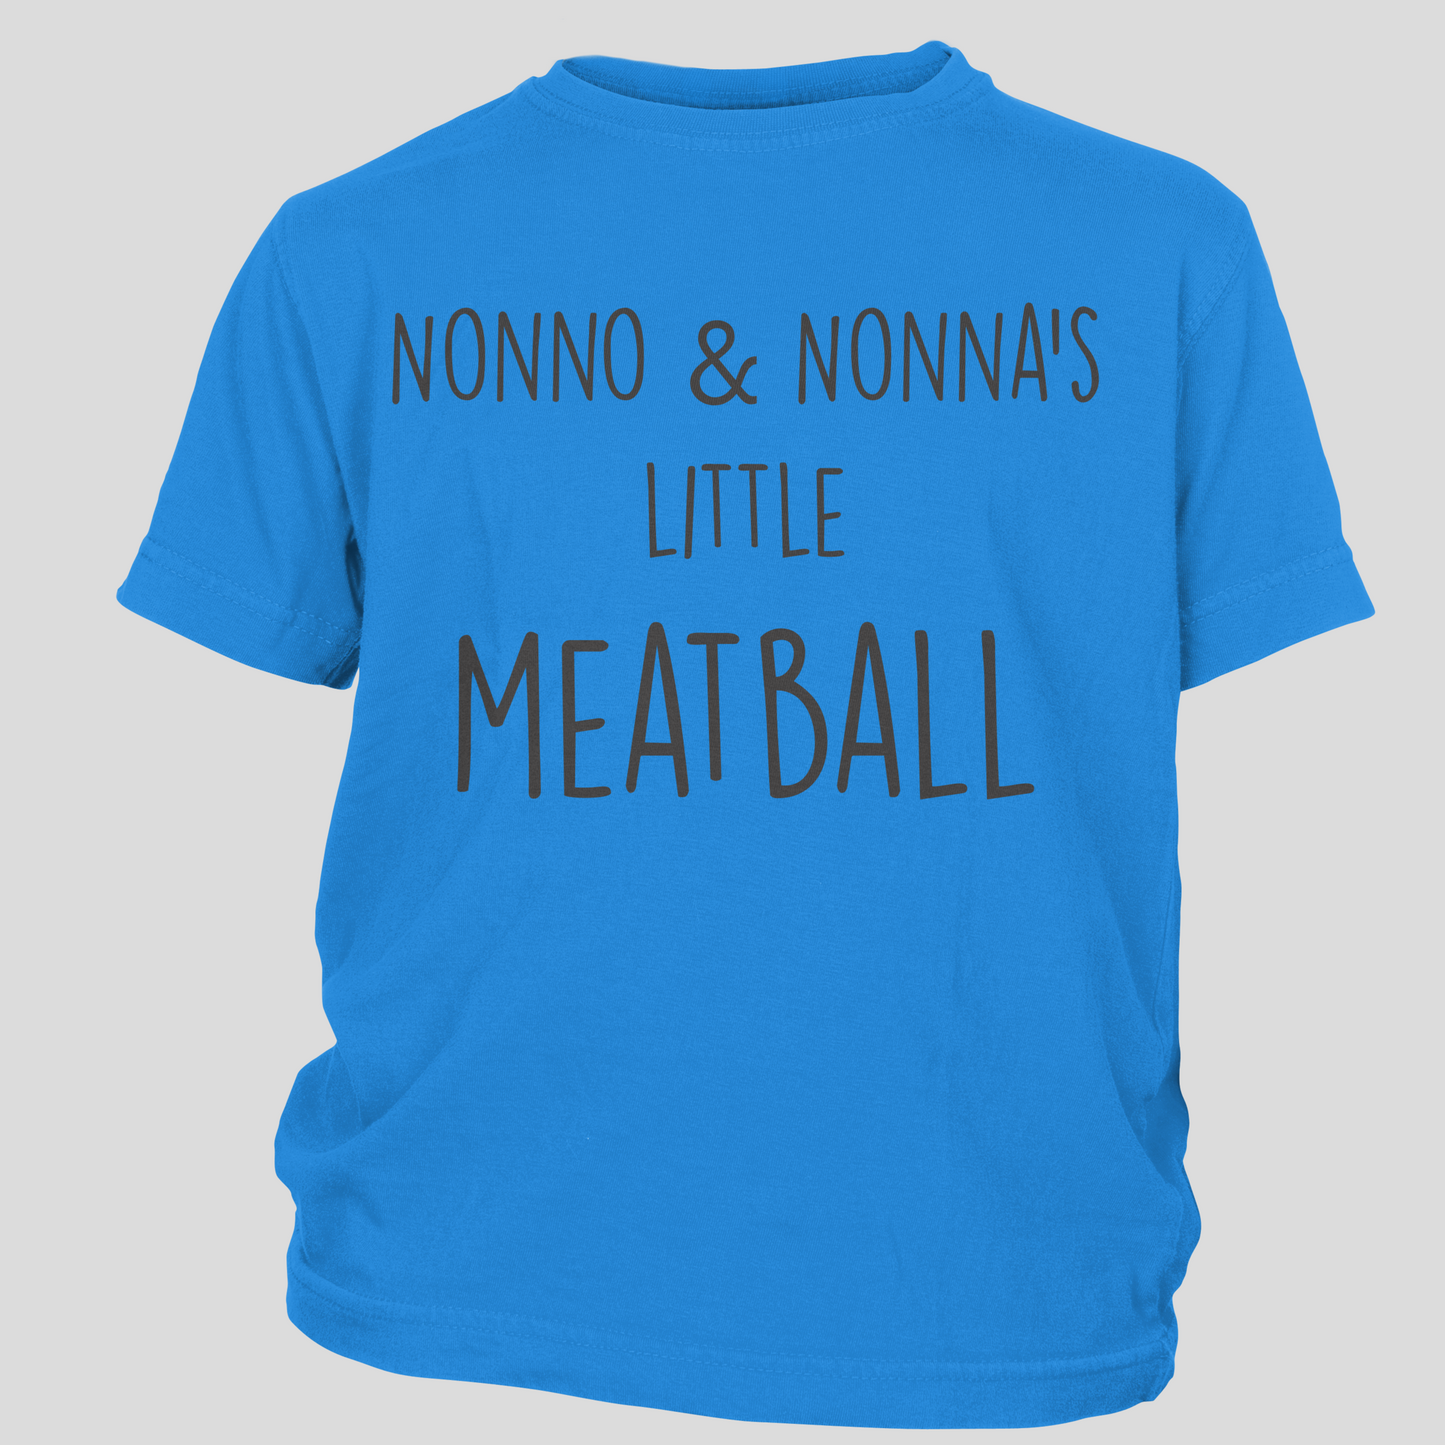 Nonno & Nonna's Little Meatball Toddler Tees